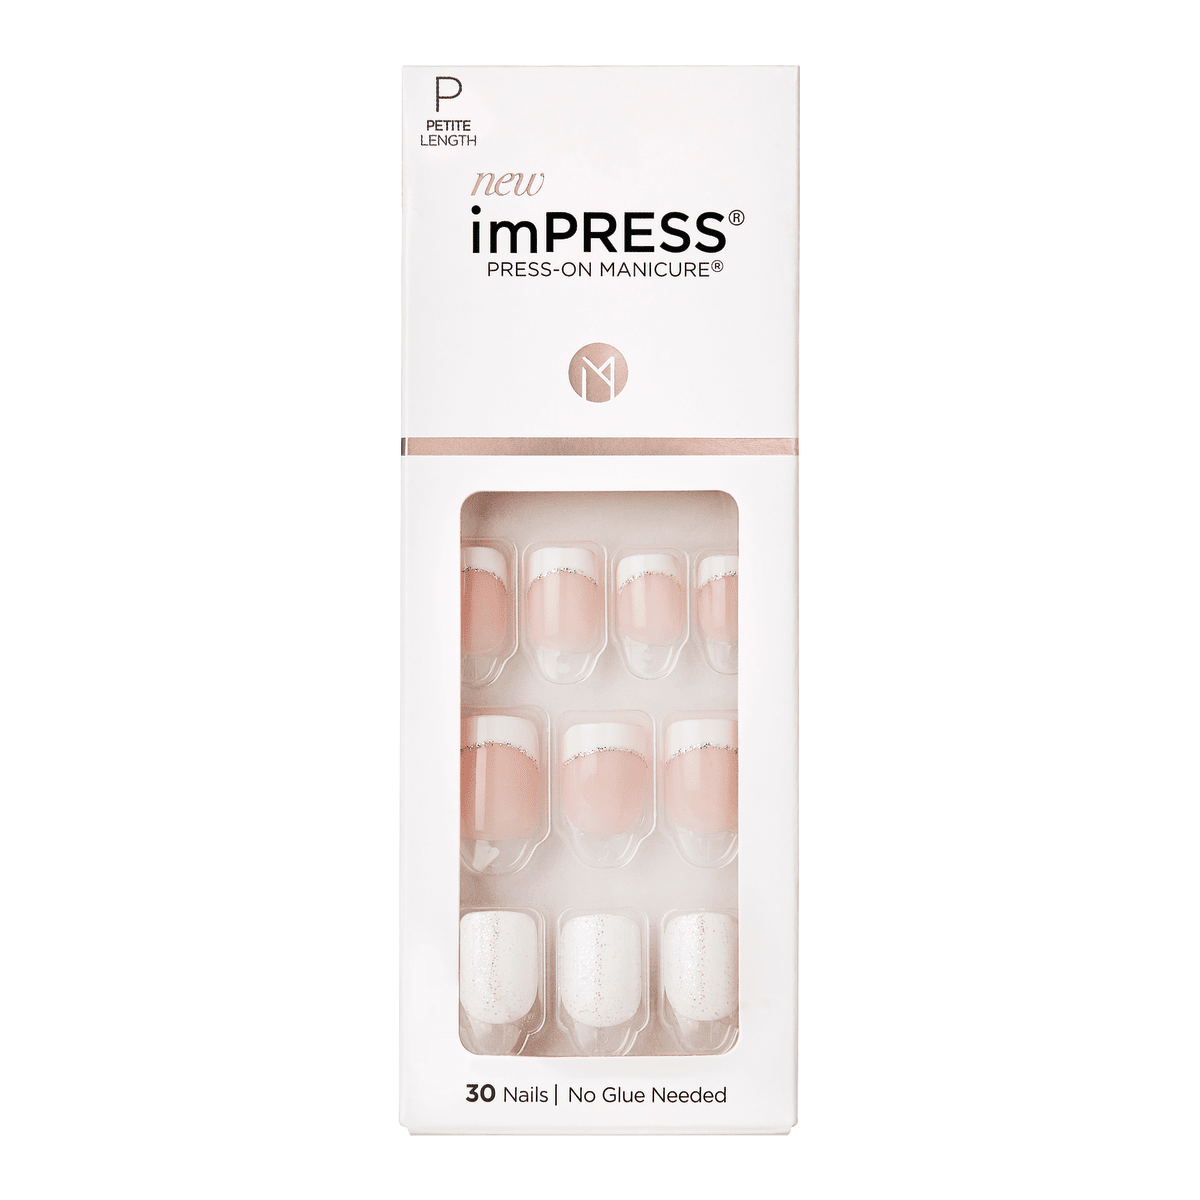 imPRESS Press-On Manicure Petite -  Mini Me